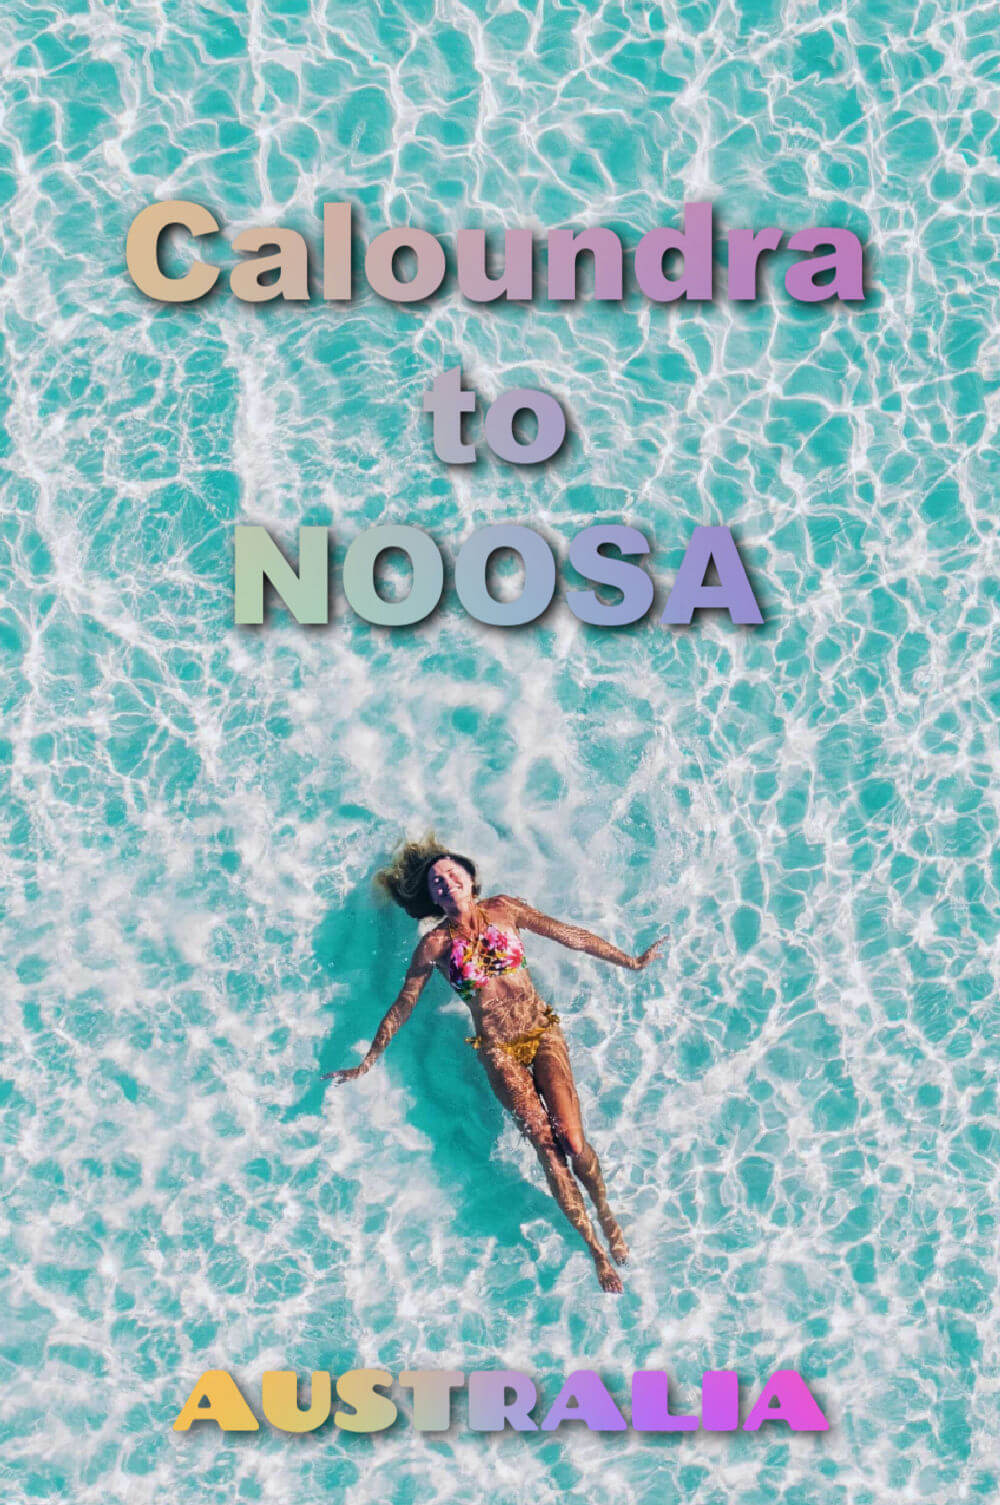 Bikini Clad Women Floating Caloundra to Noosa